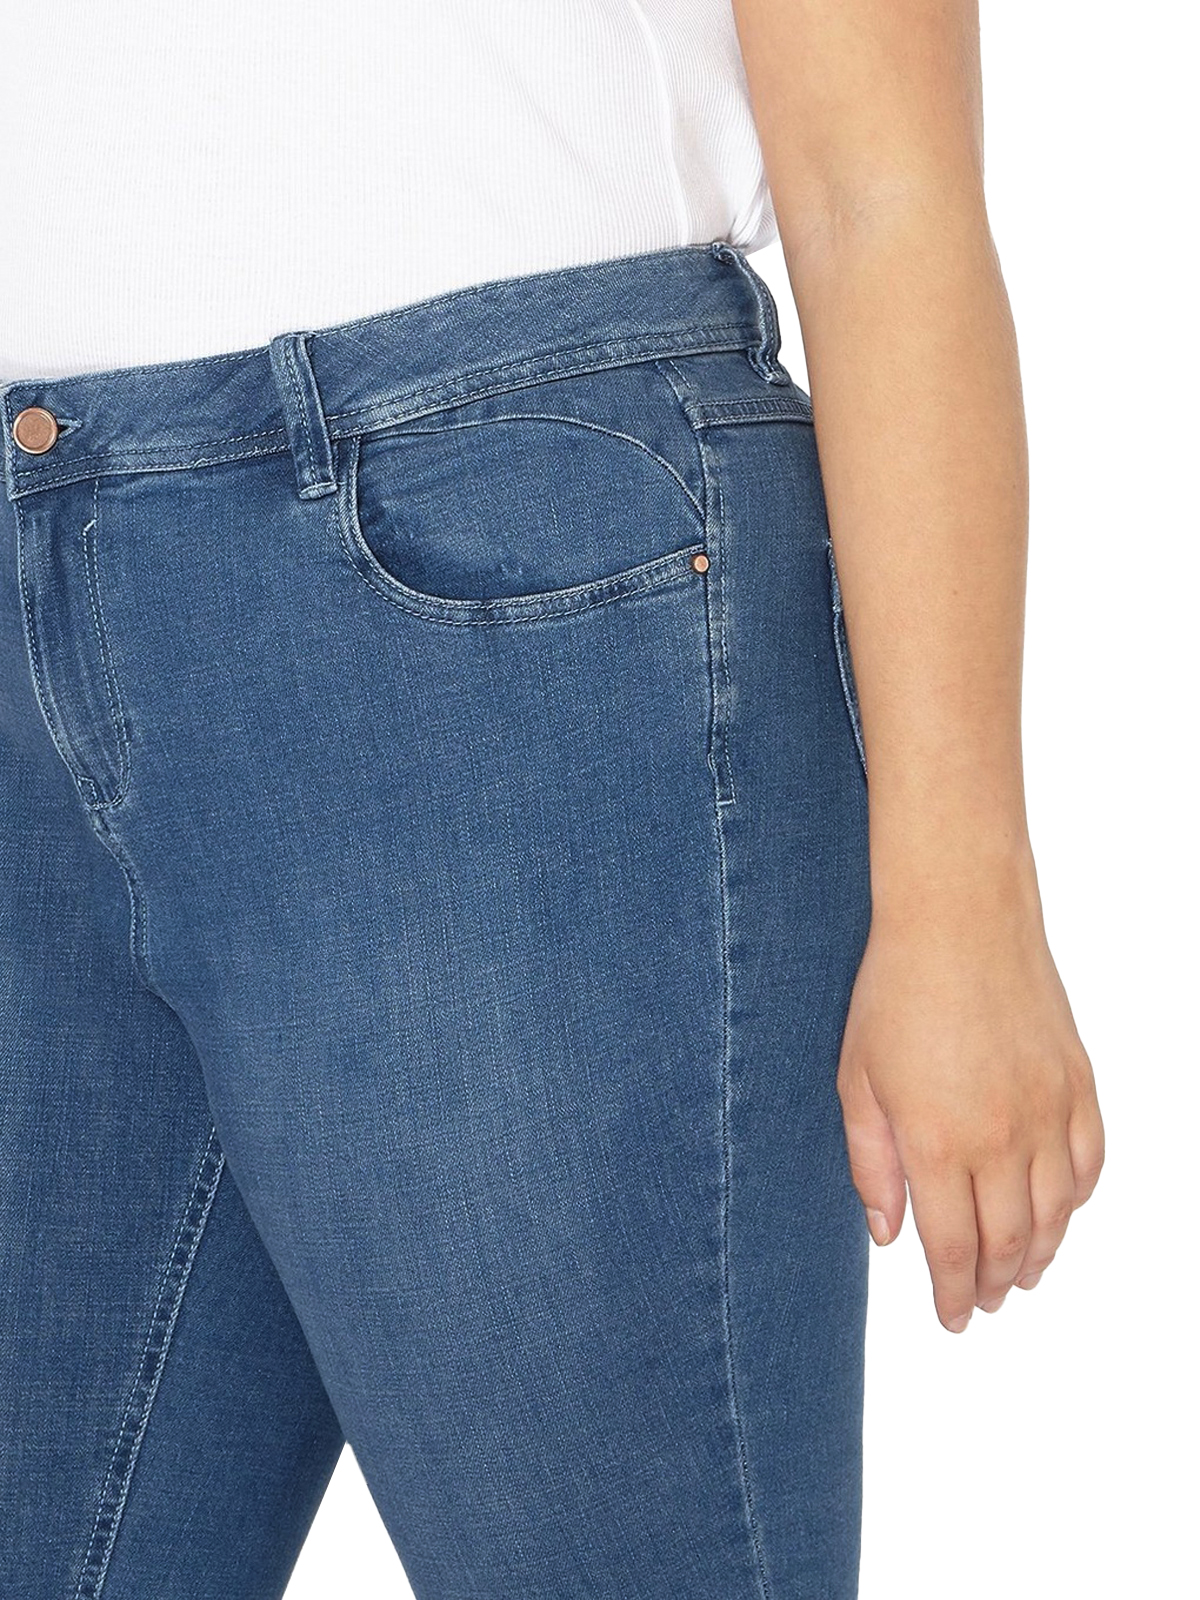 3VANS DENIM Mid-Wash Pear Fit Straight Leg Jeans - Plus Size 16 to 30